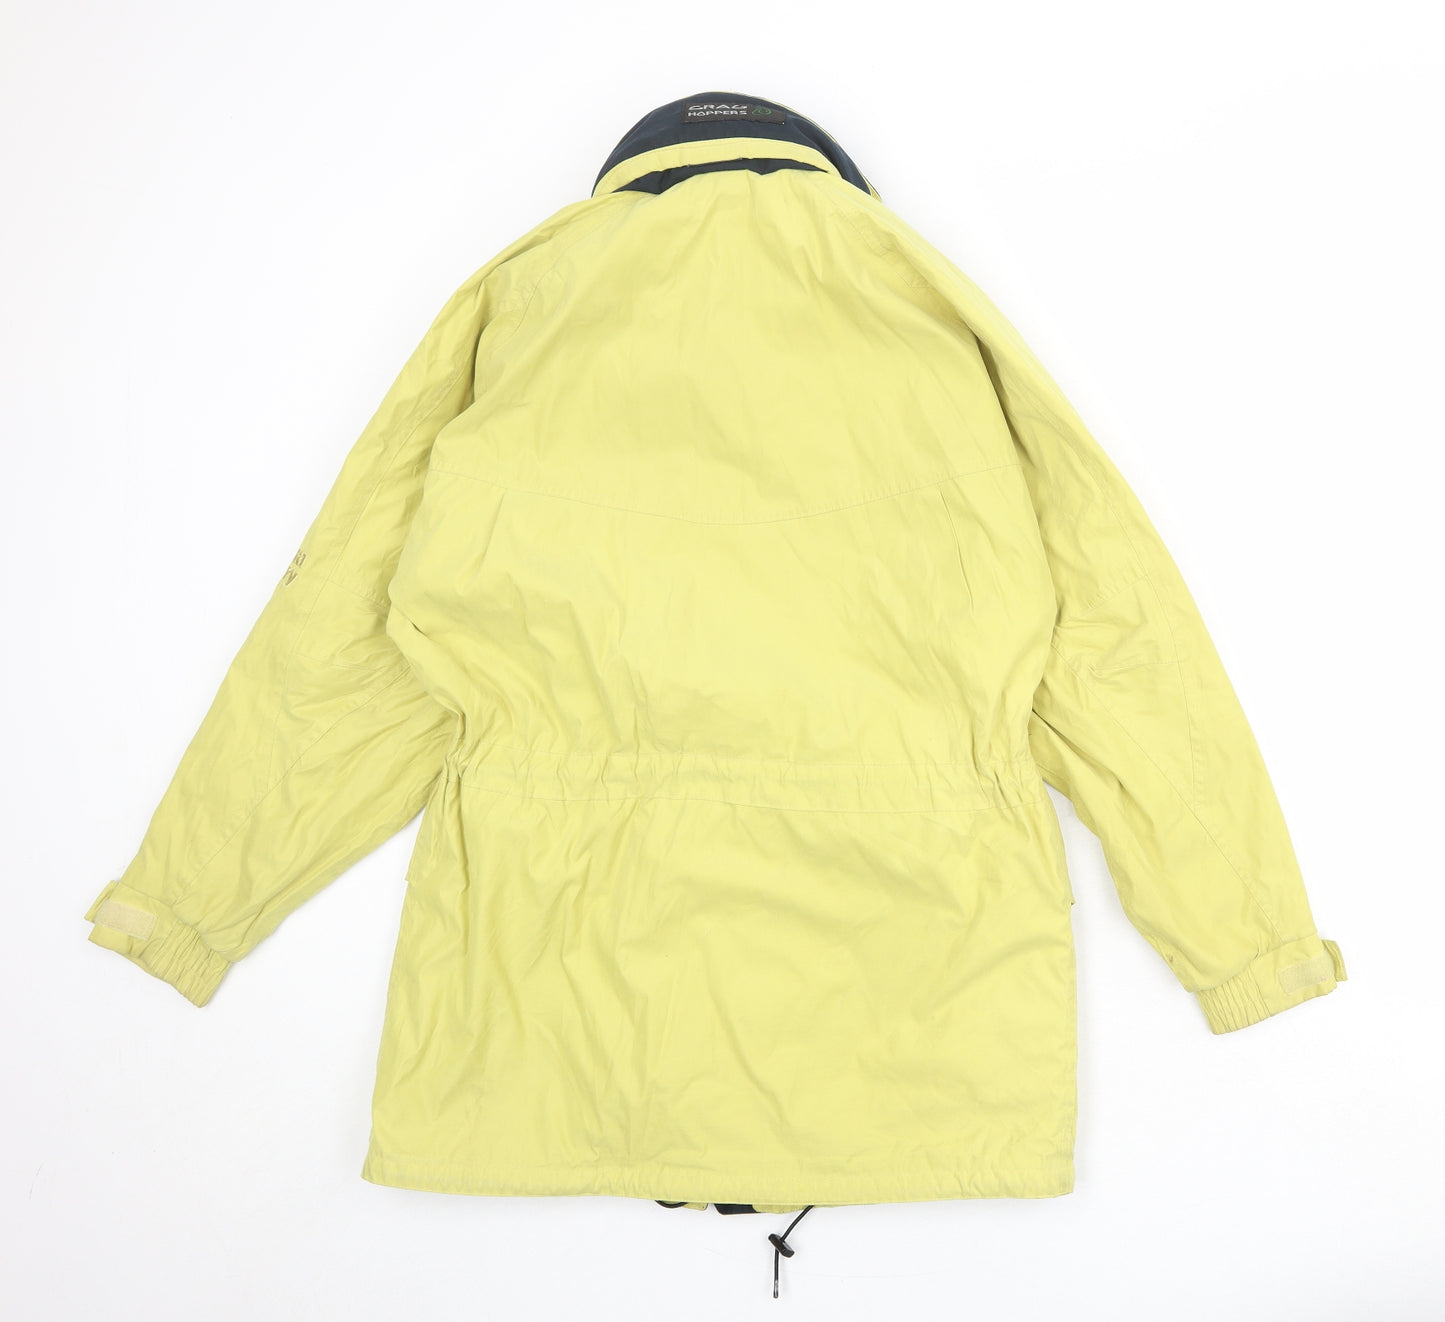 Craghoppers Womens Yellow Windbreaker Jacket Size 10 Zip